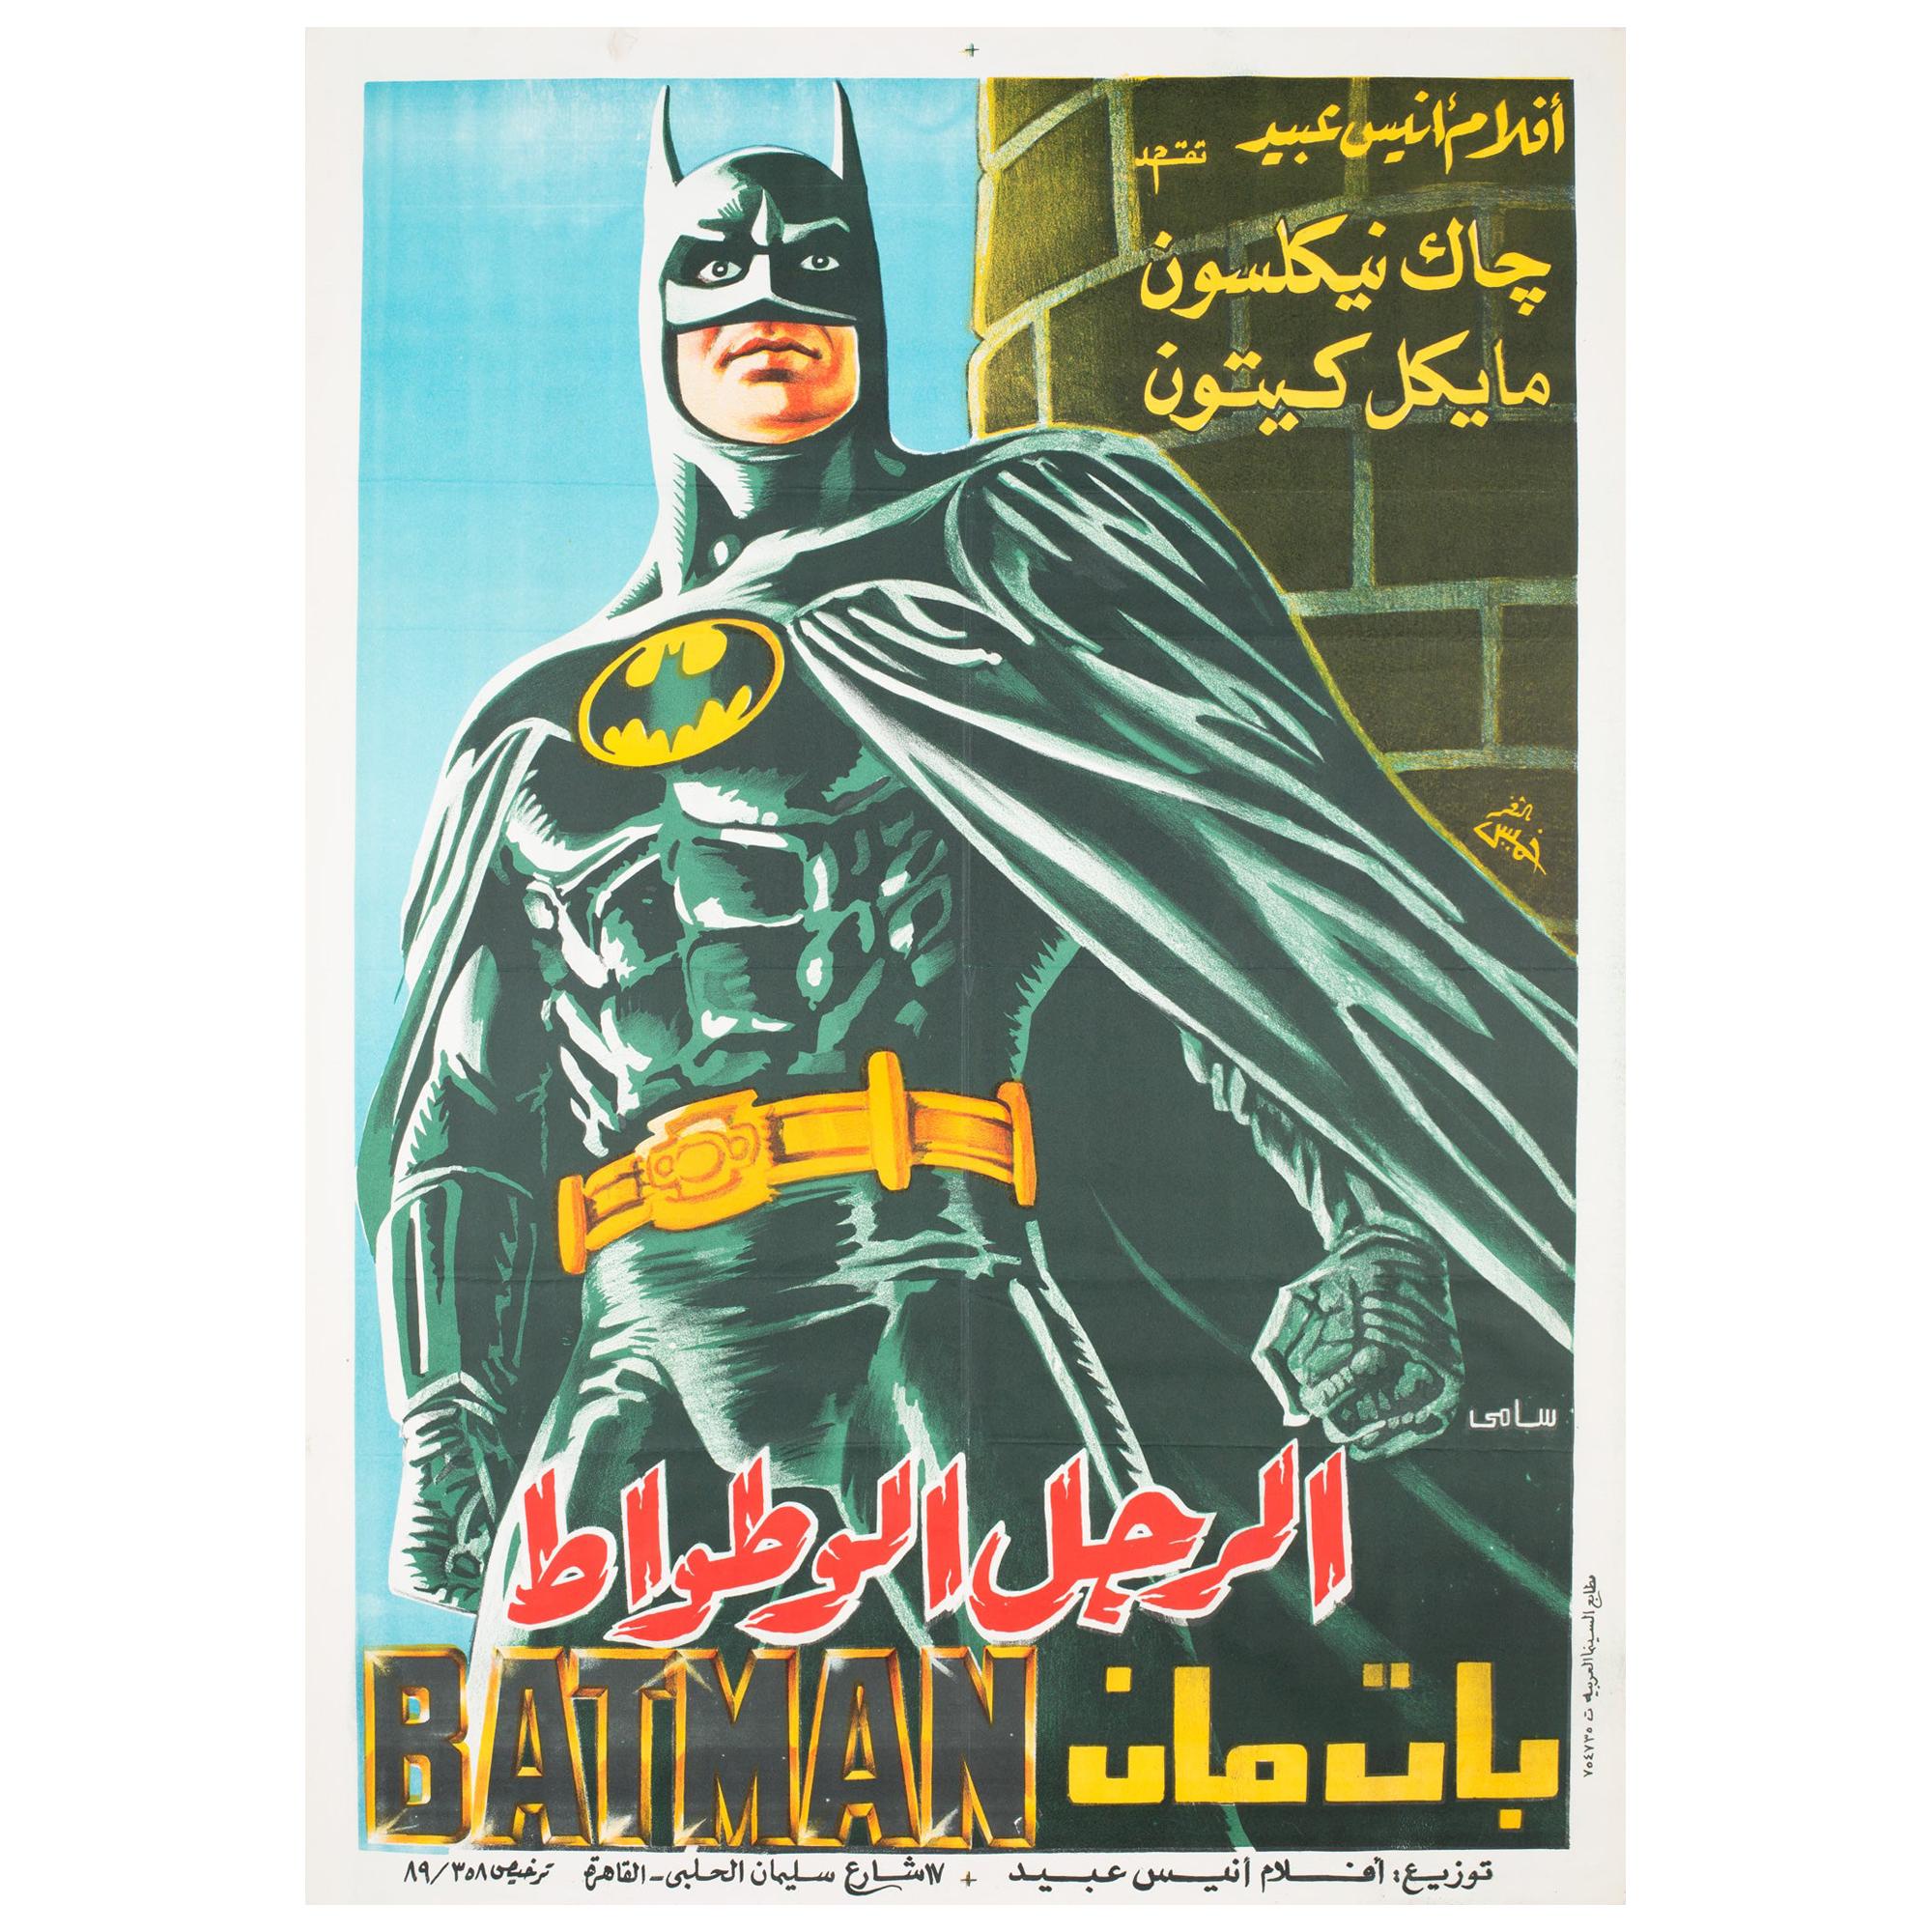 Batman Original Egyptian Film Movie Poster, 1989